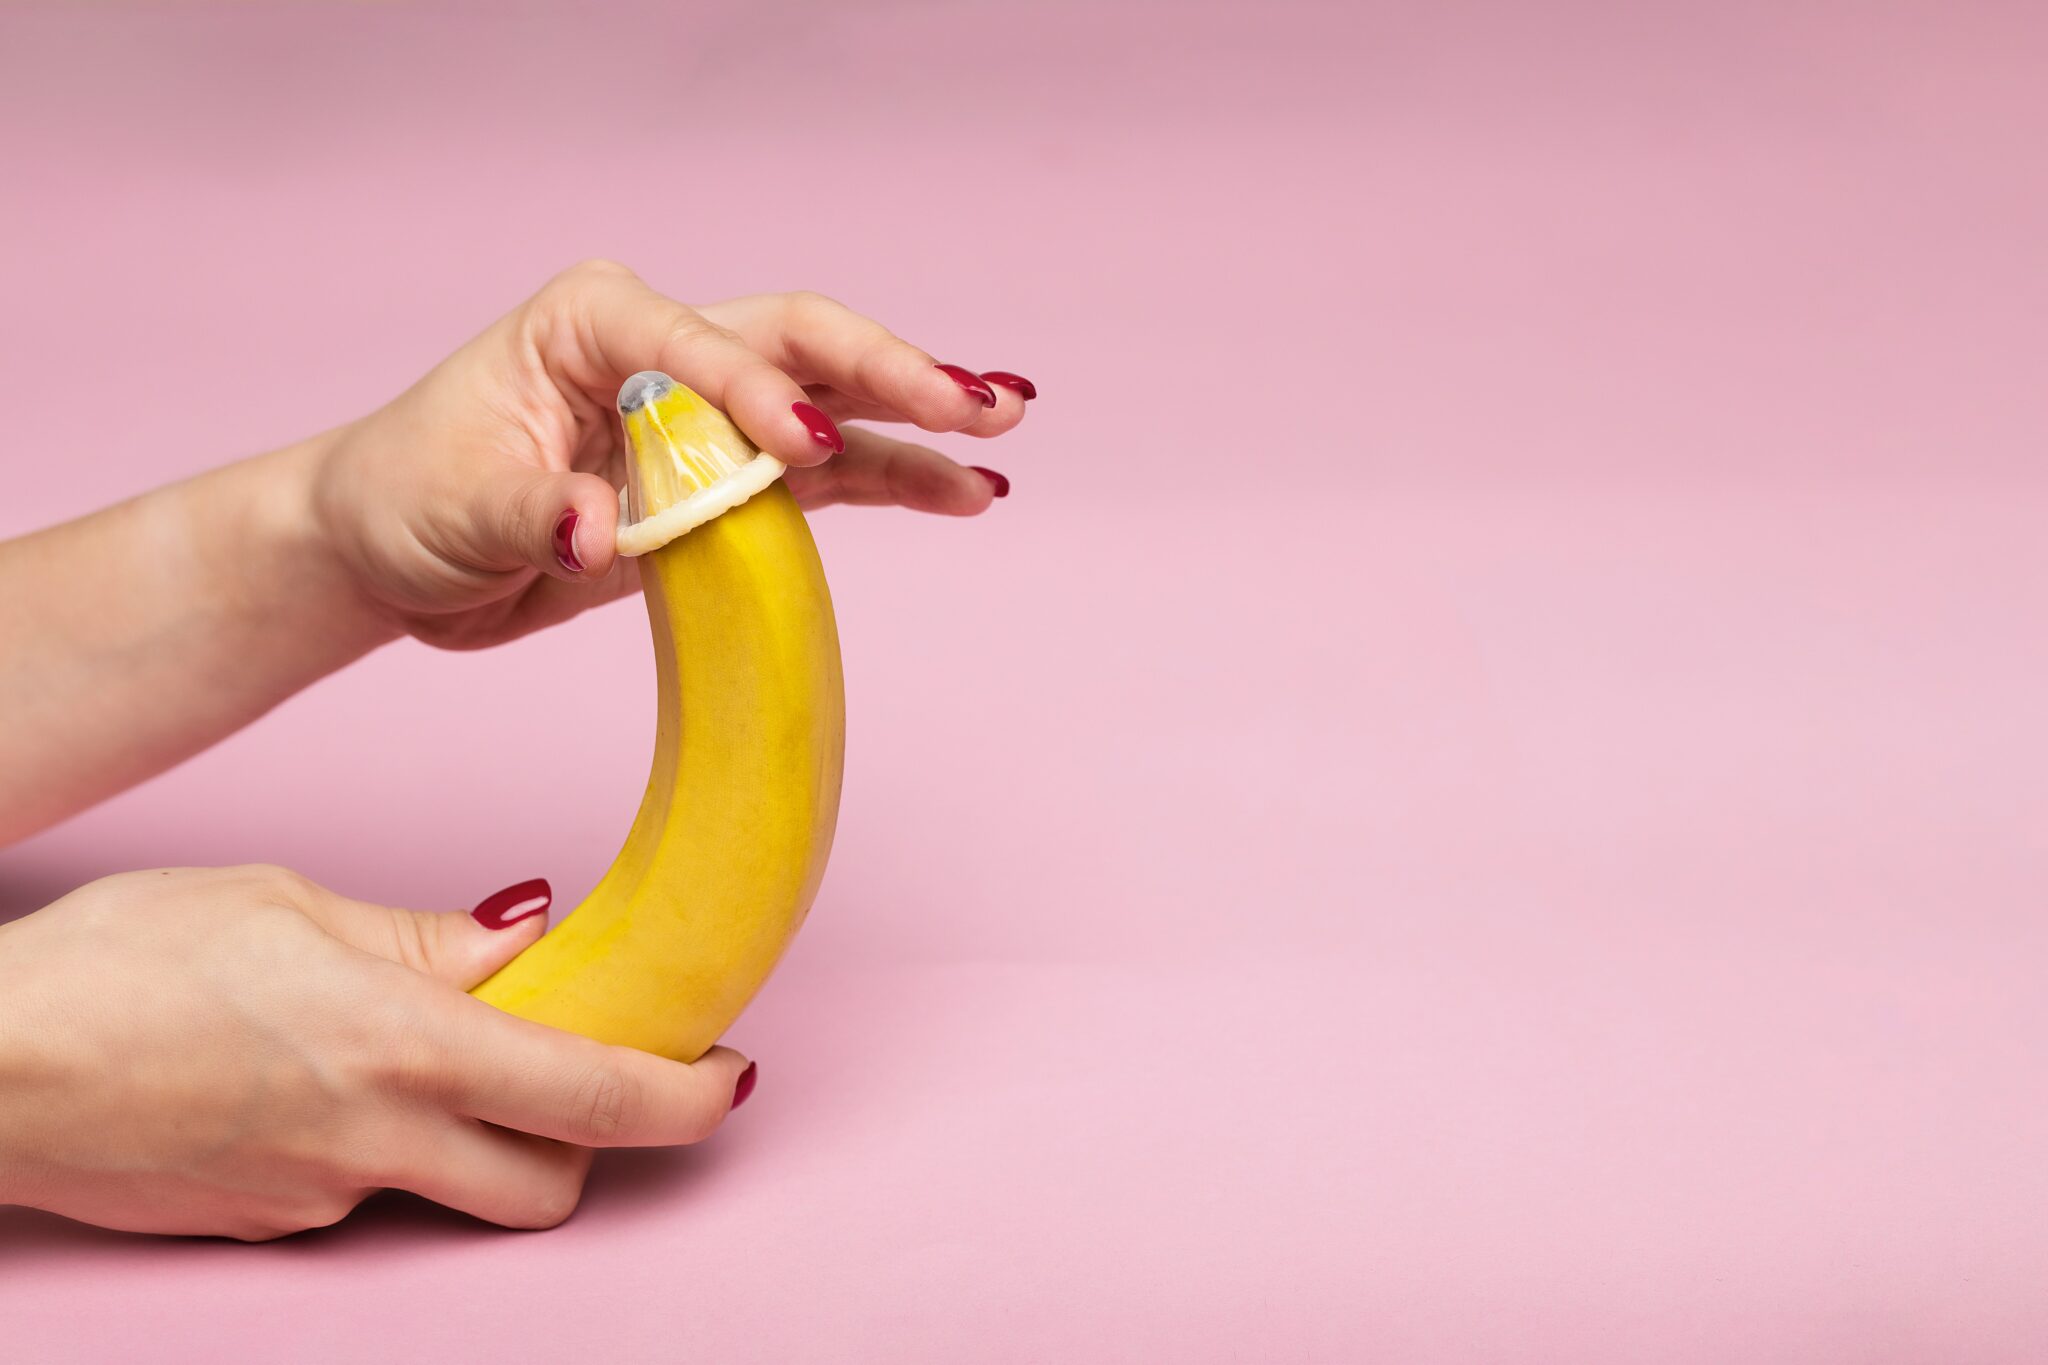 A woman's hand sliding a condom onto a banana.